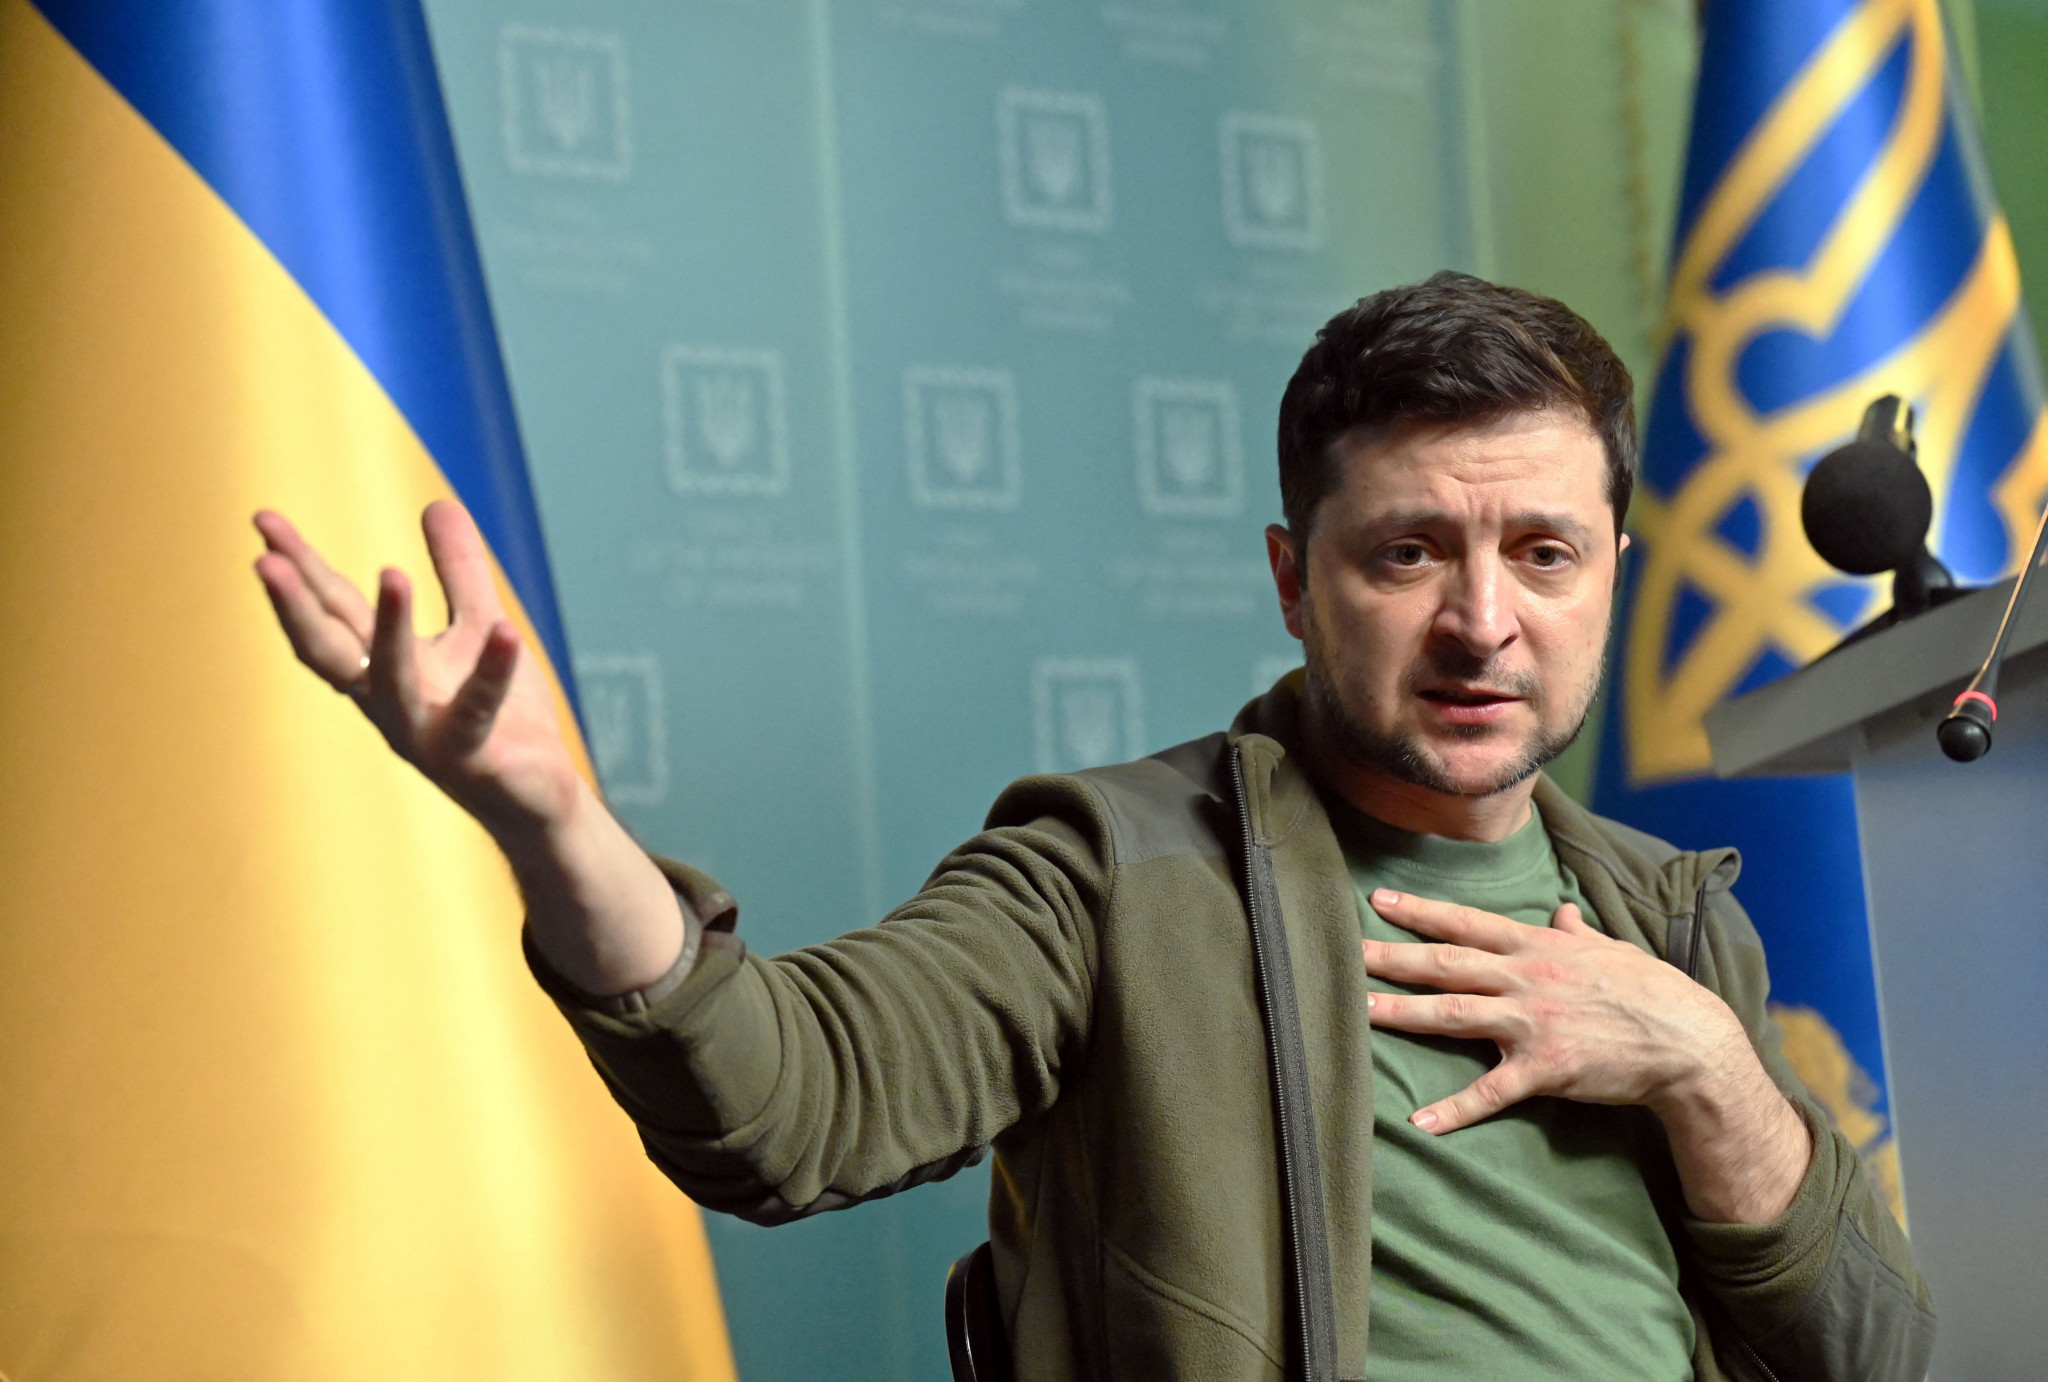 Ukrainian President Volodymyr Zelenskyy's video has been released ©Getty Images